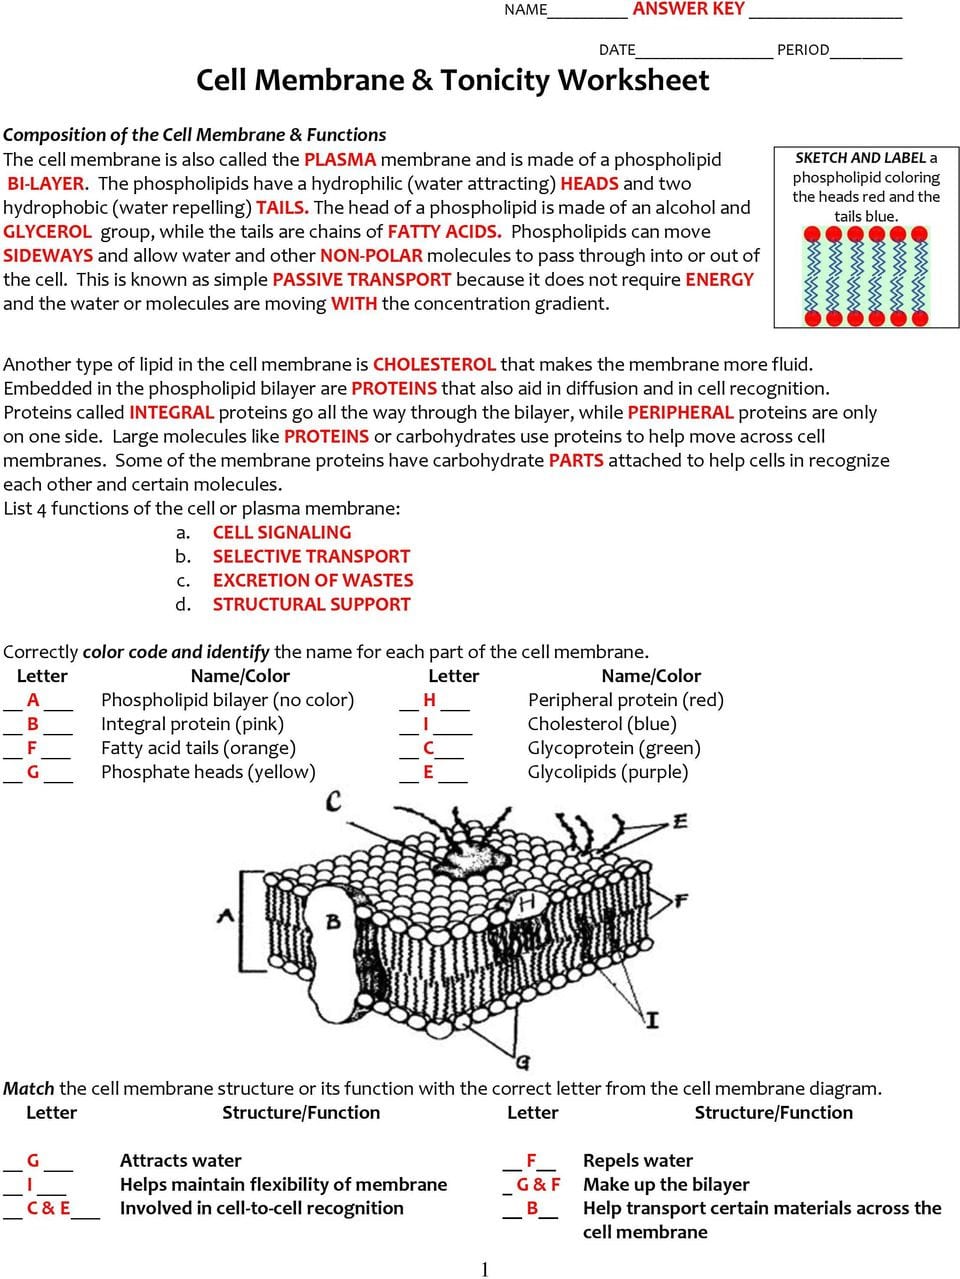 Cell Membrane  Tonicity Worksheet  Pdf